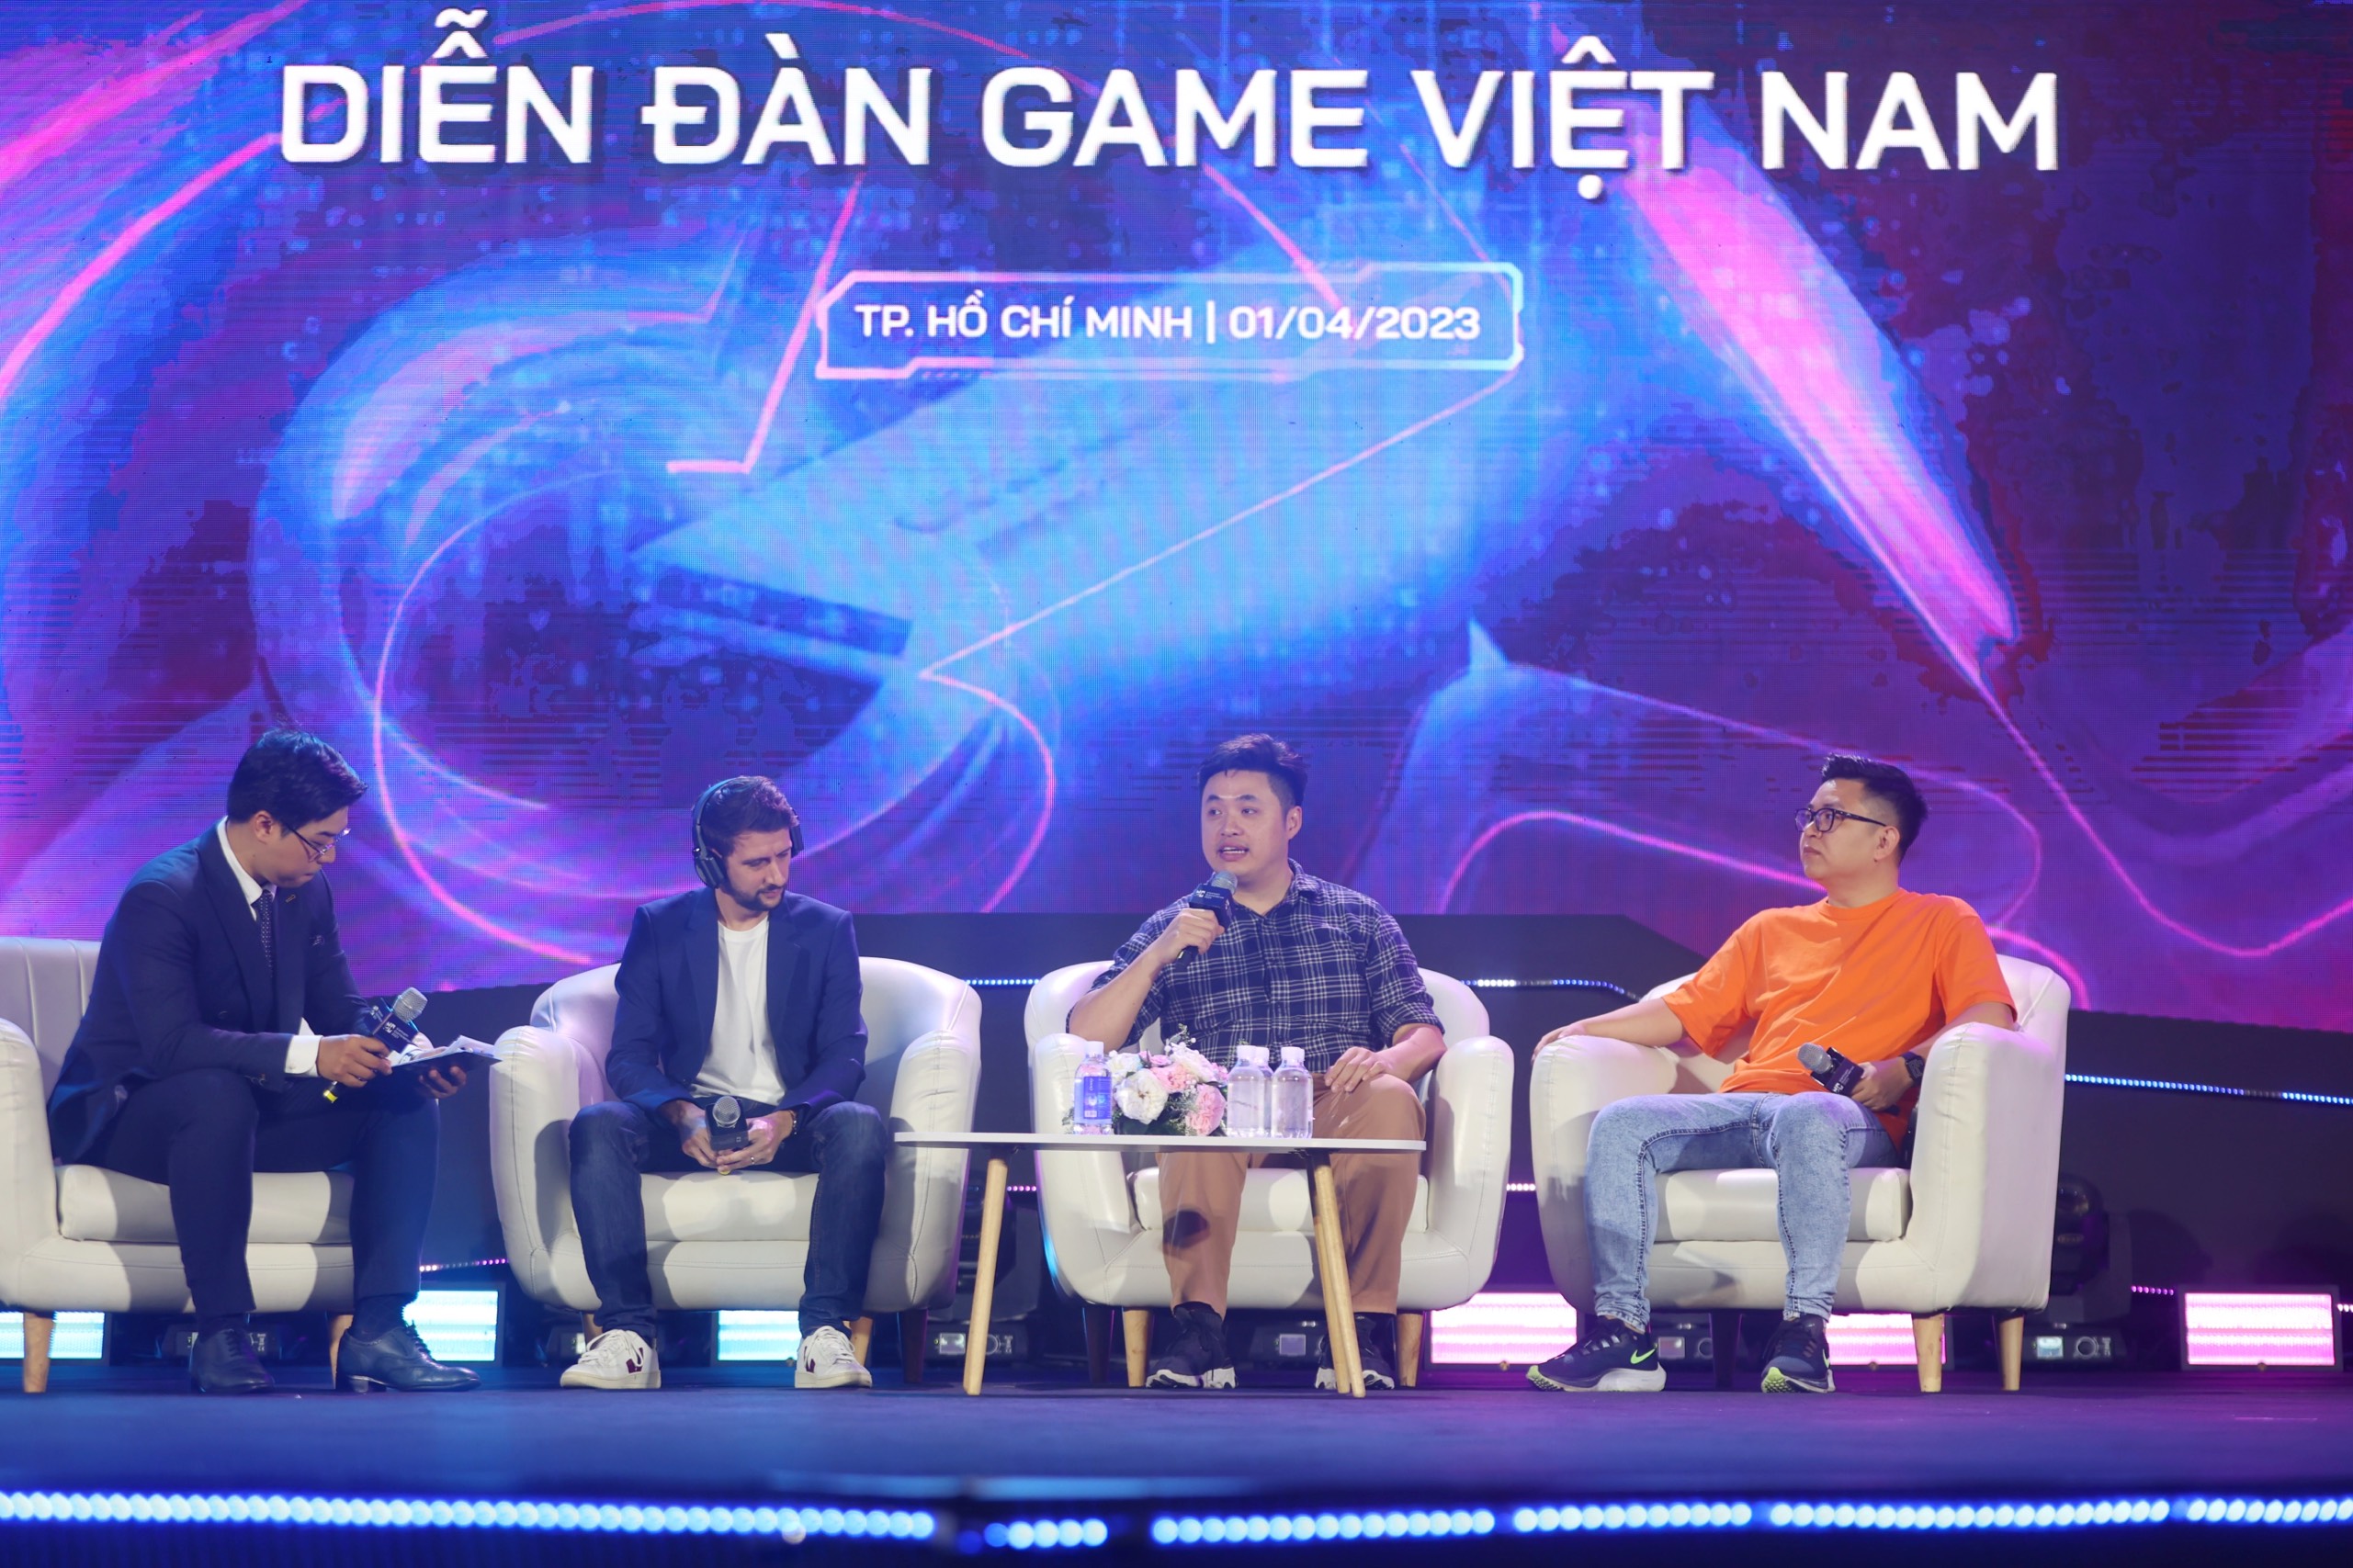 Gaming Market In Vietnam